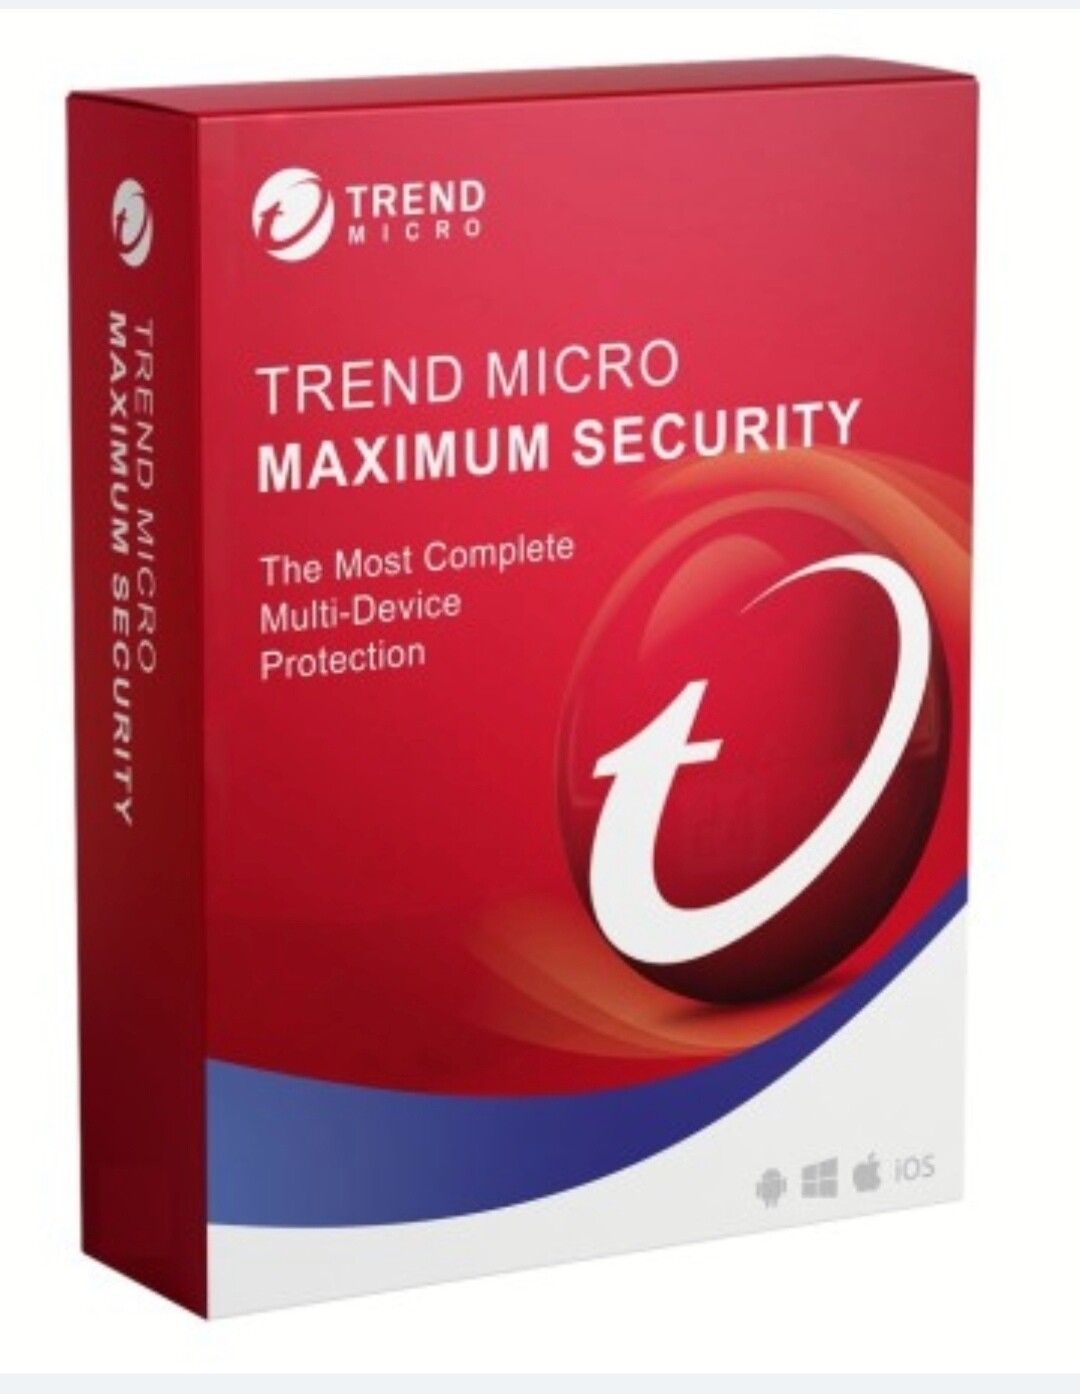 Trend Micro MAXIMUM SECURITY 10 PC 1 anno Licenza Trend Micro